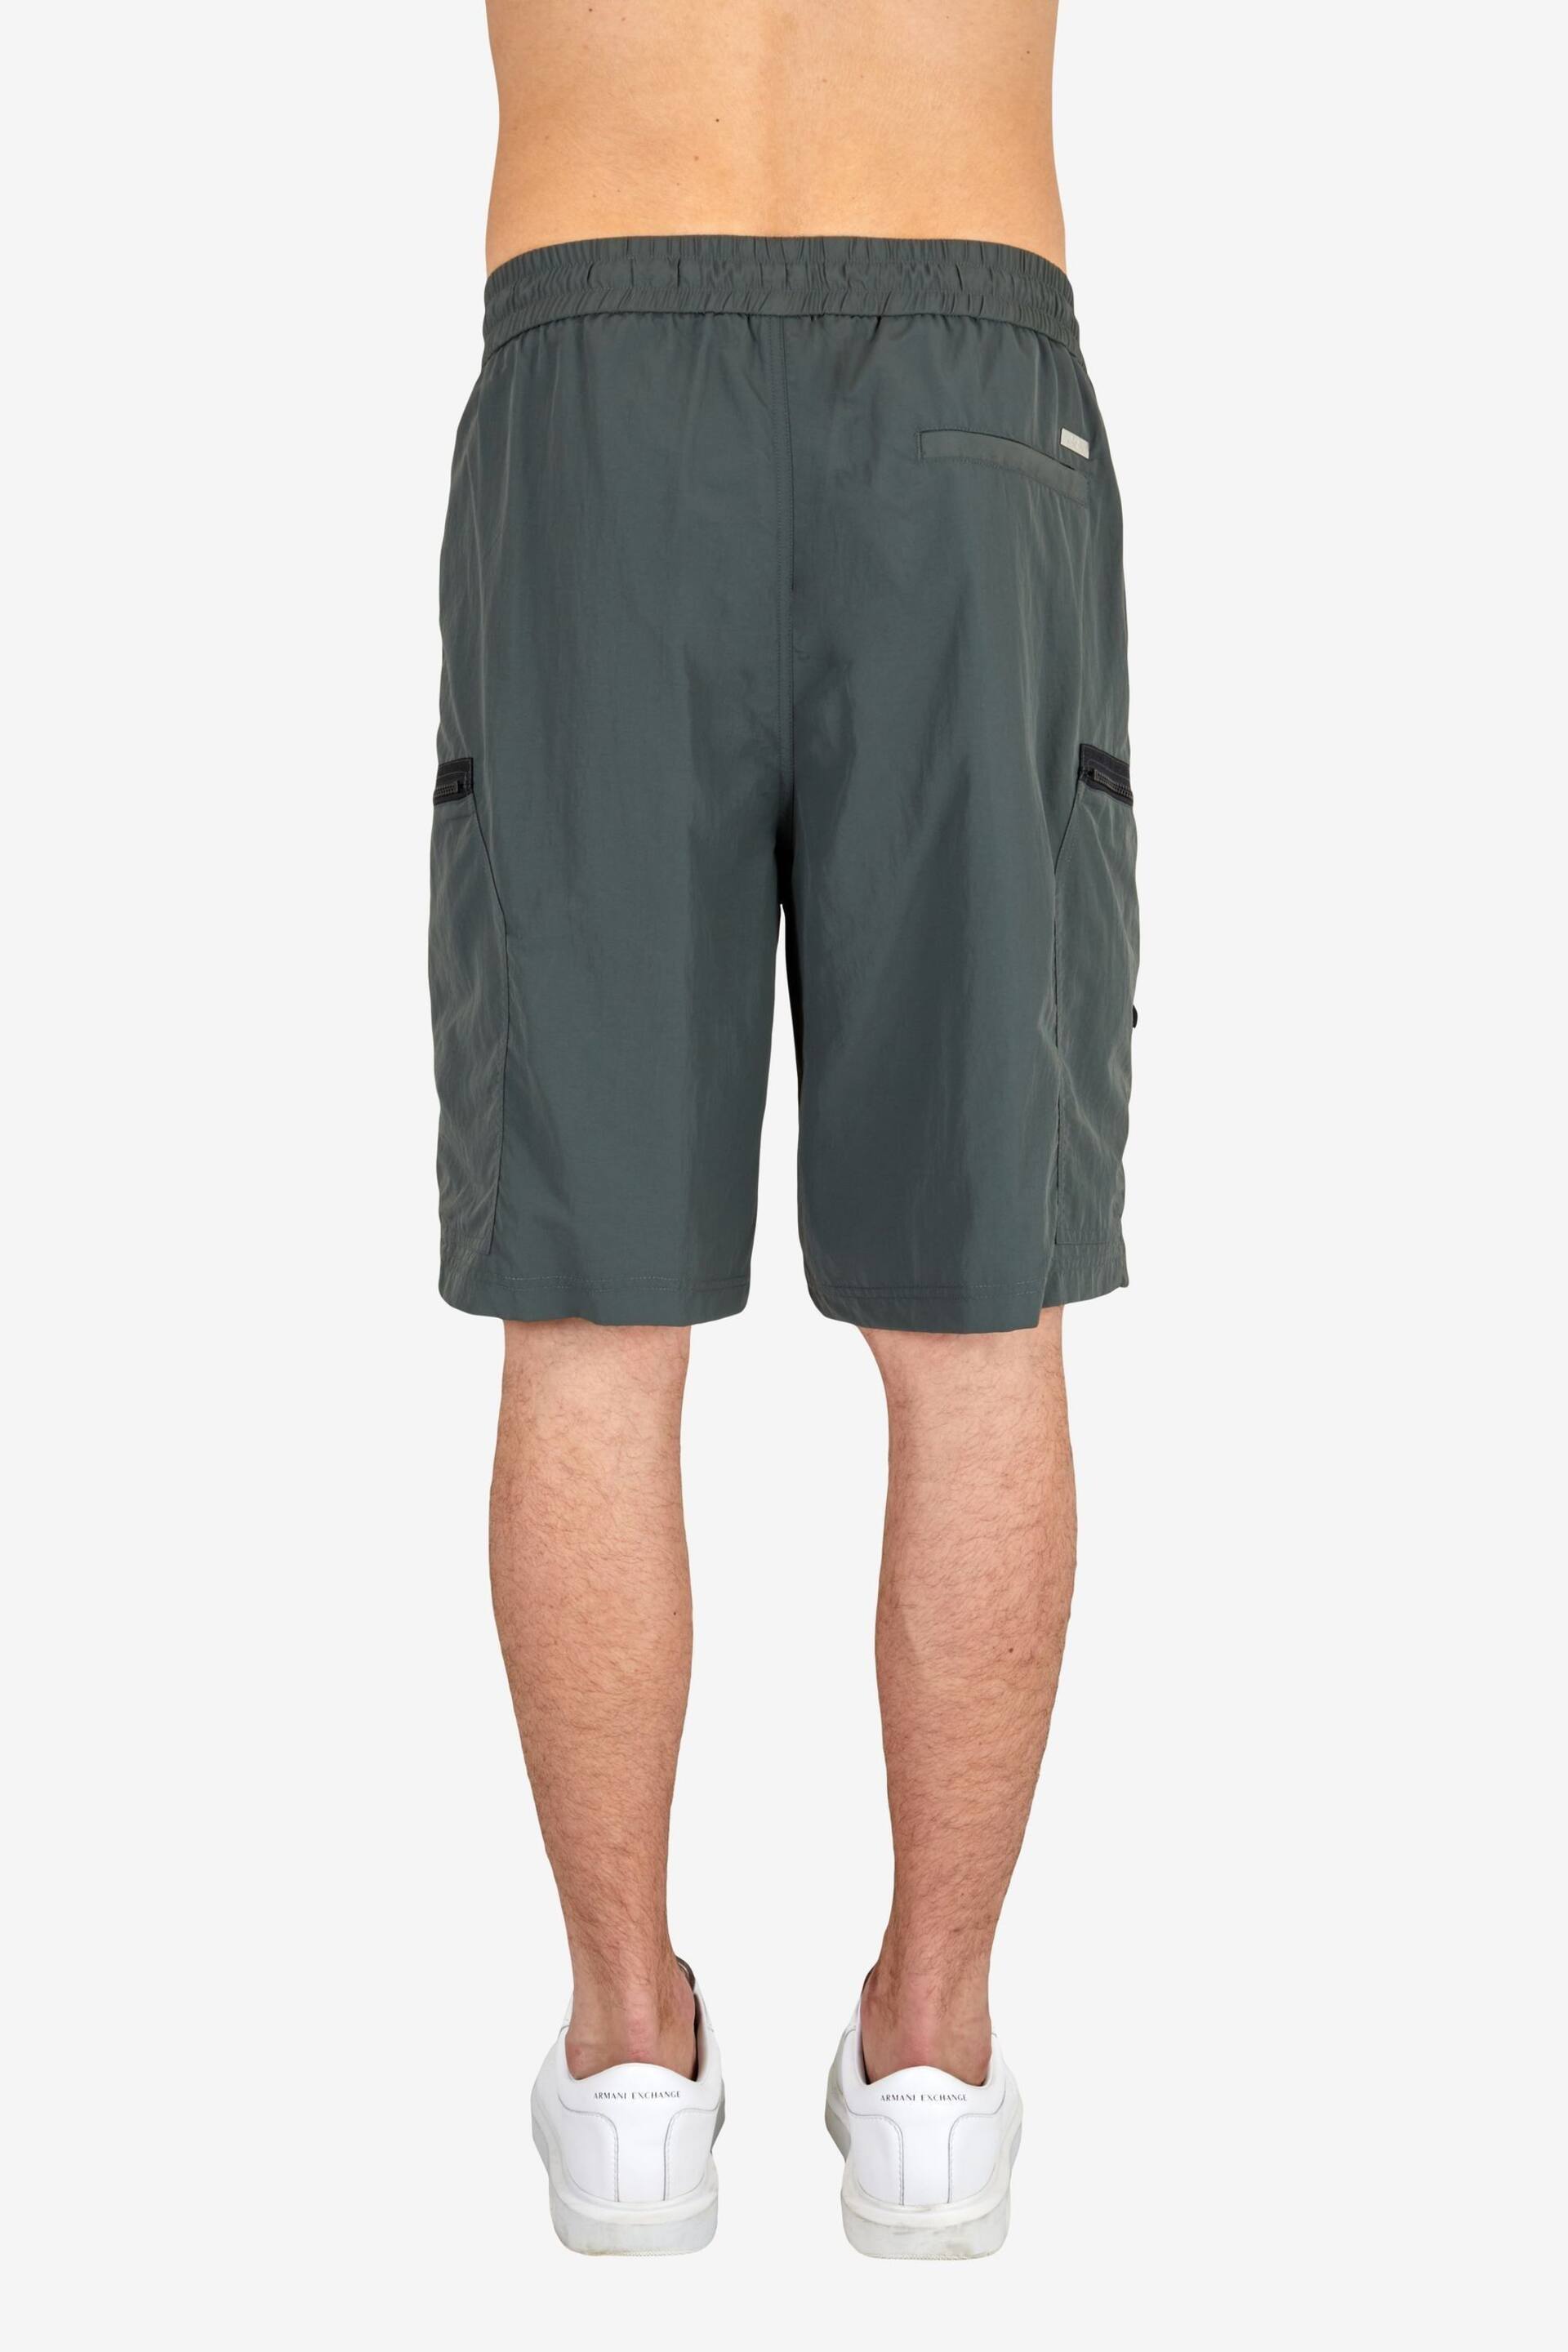 Armani Exchange Dark Grey Cargo Shorts - Image 4 of 8